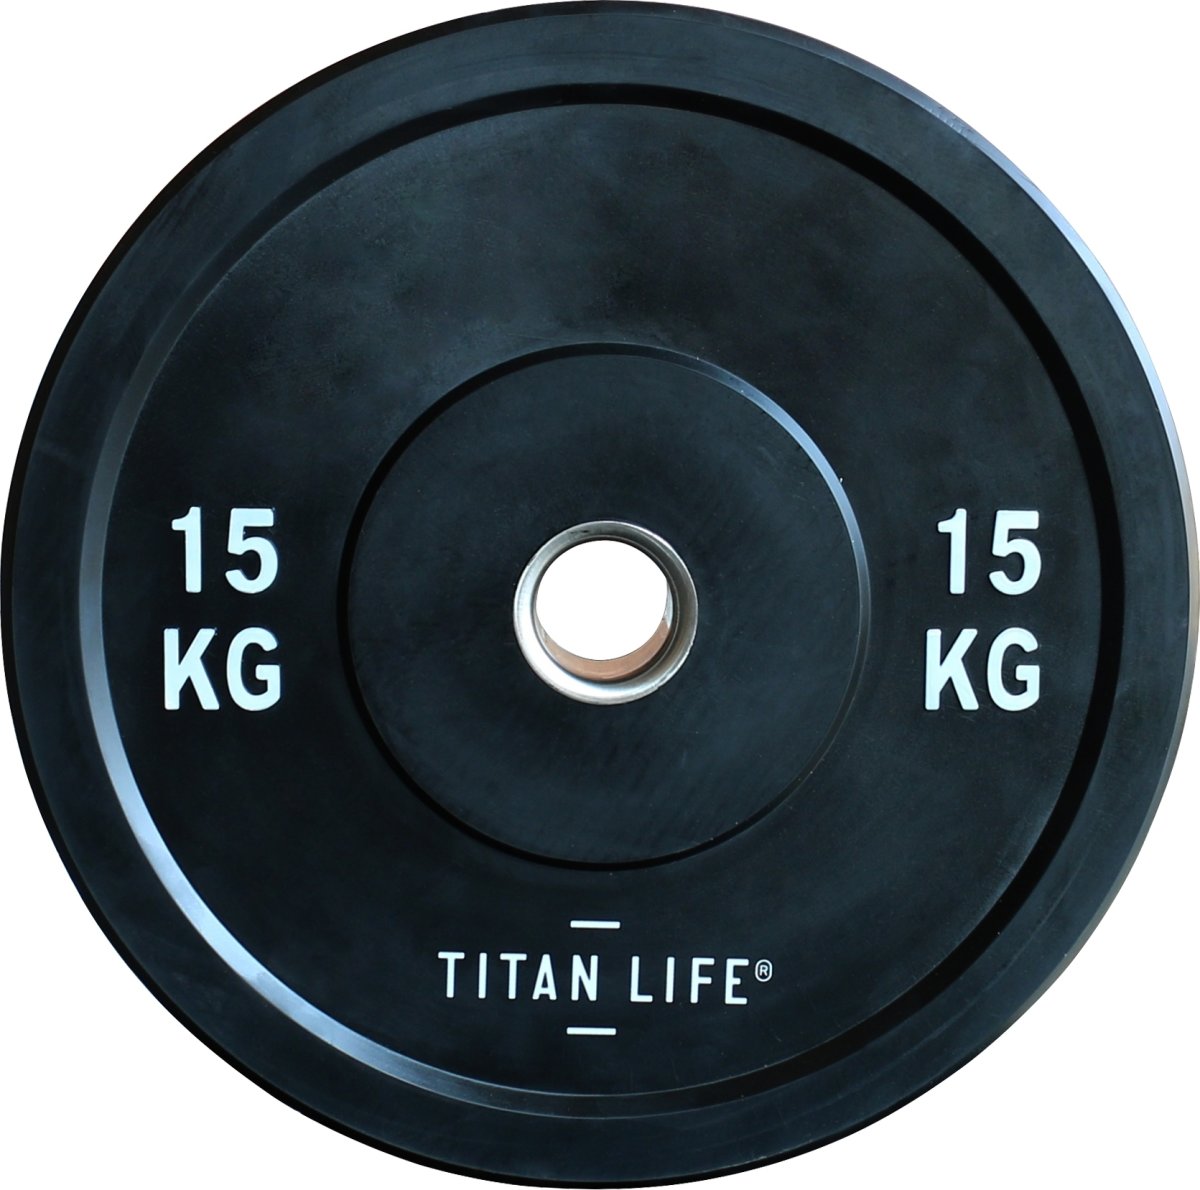 Titan Life Rubber Bumper Plate 15 kg